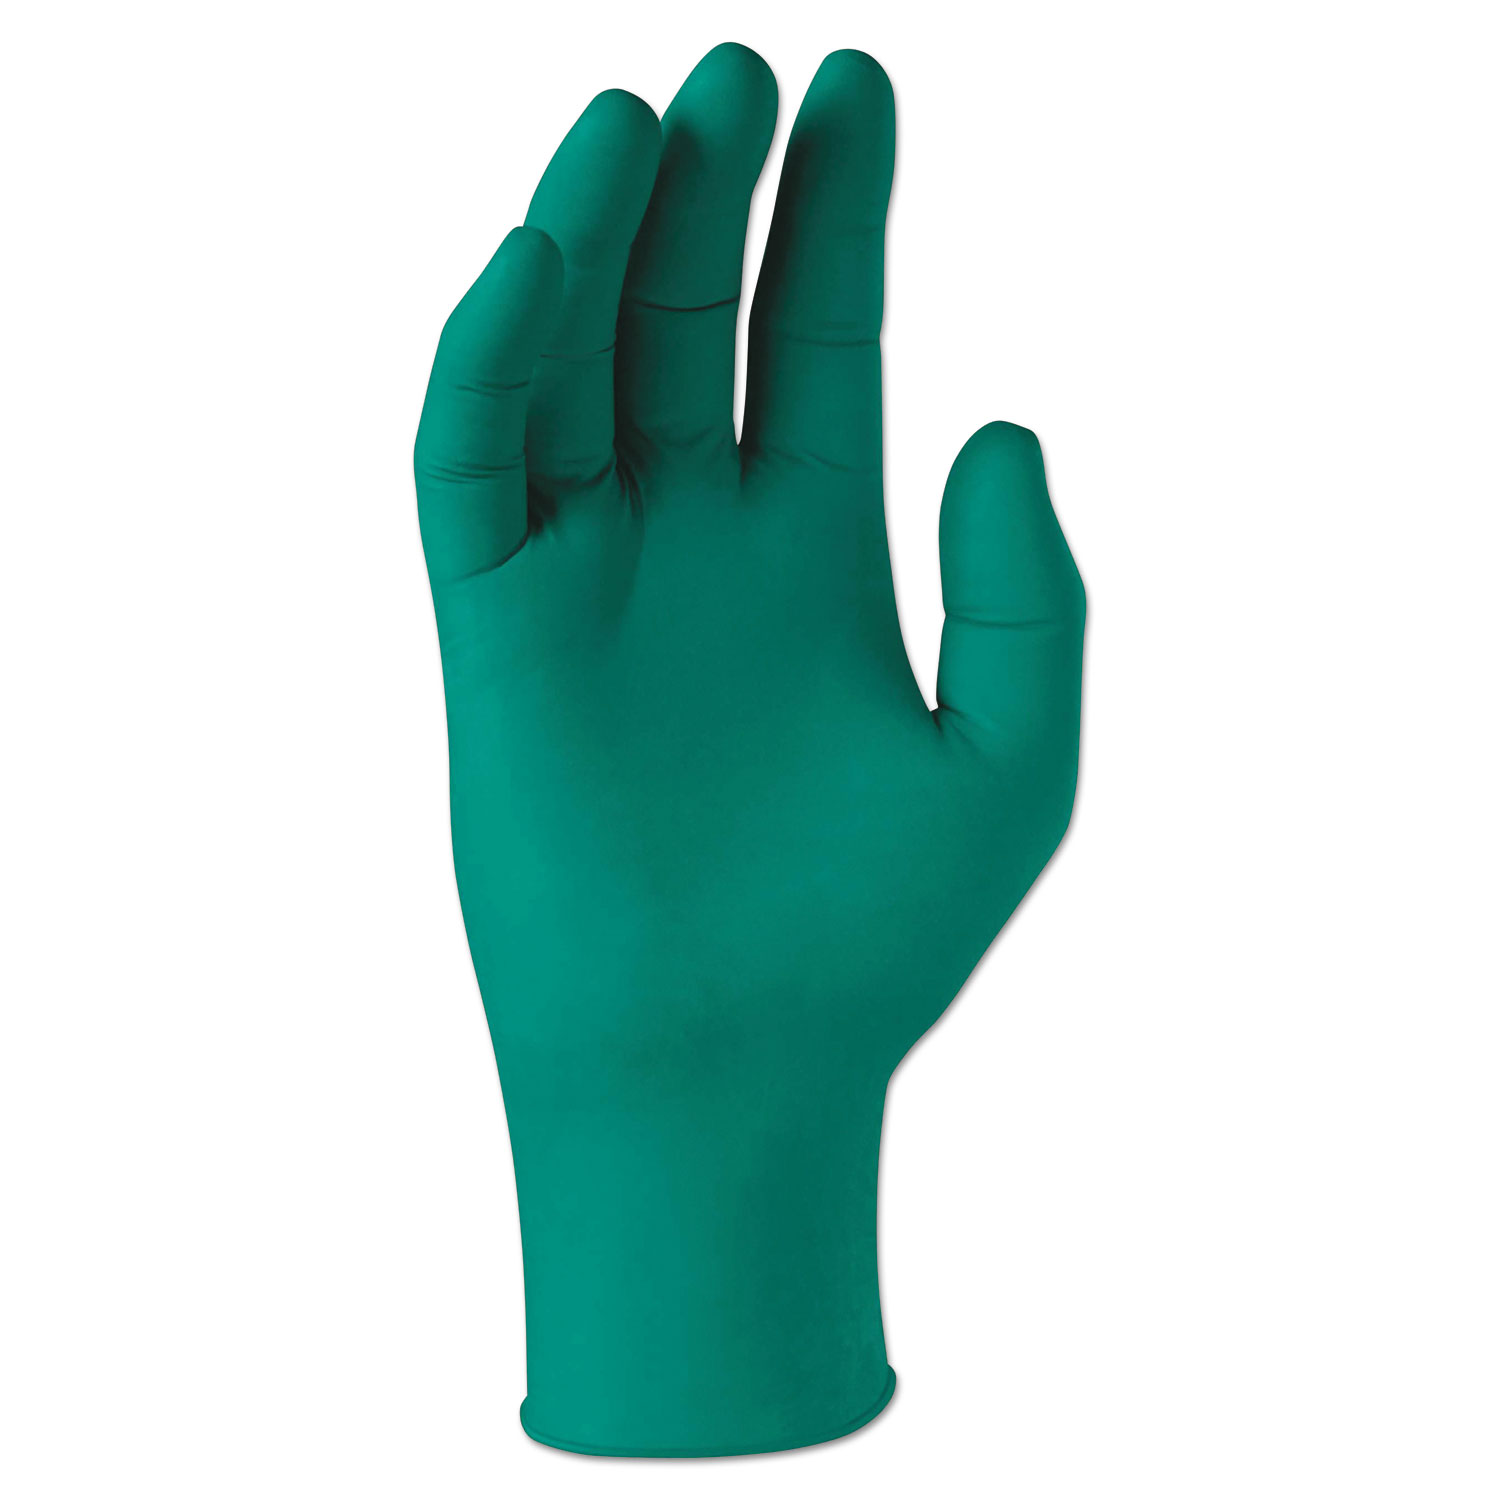  Kimtech 43440 Spring Nitrile Powder-Free Exam Gloves, Green, 250mm Length, Large, 2000/CT (KCC43440) 